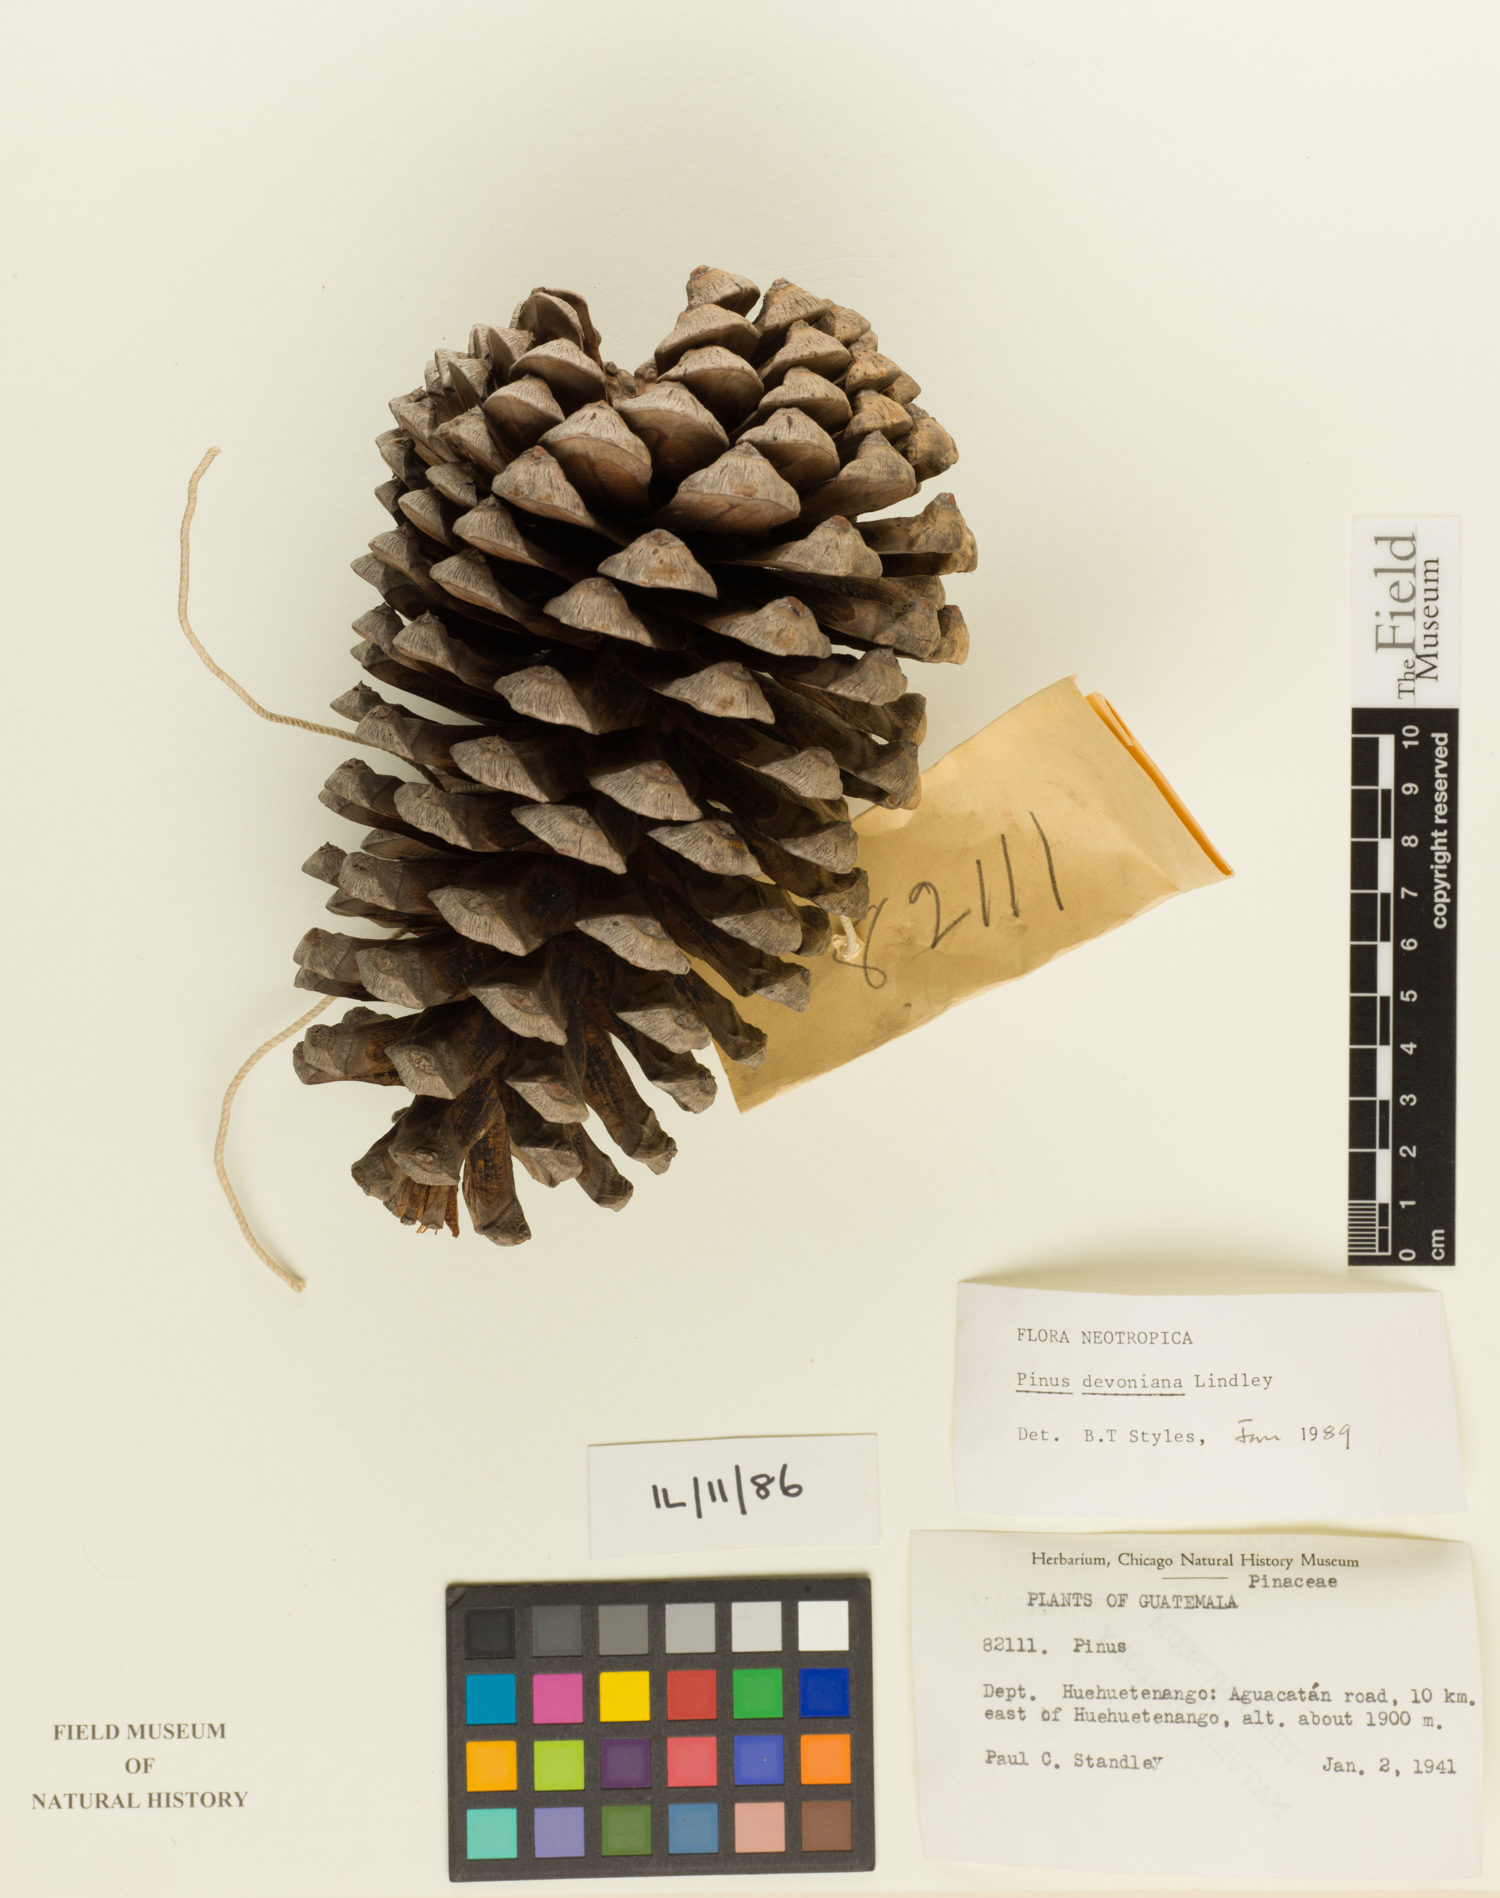 Pinus devoniana image